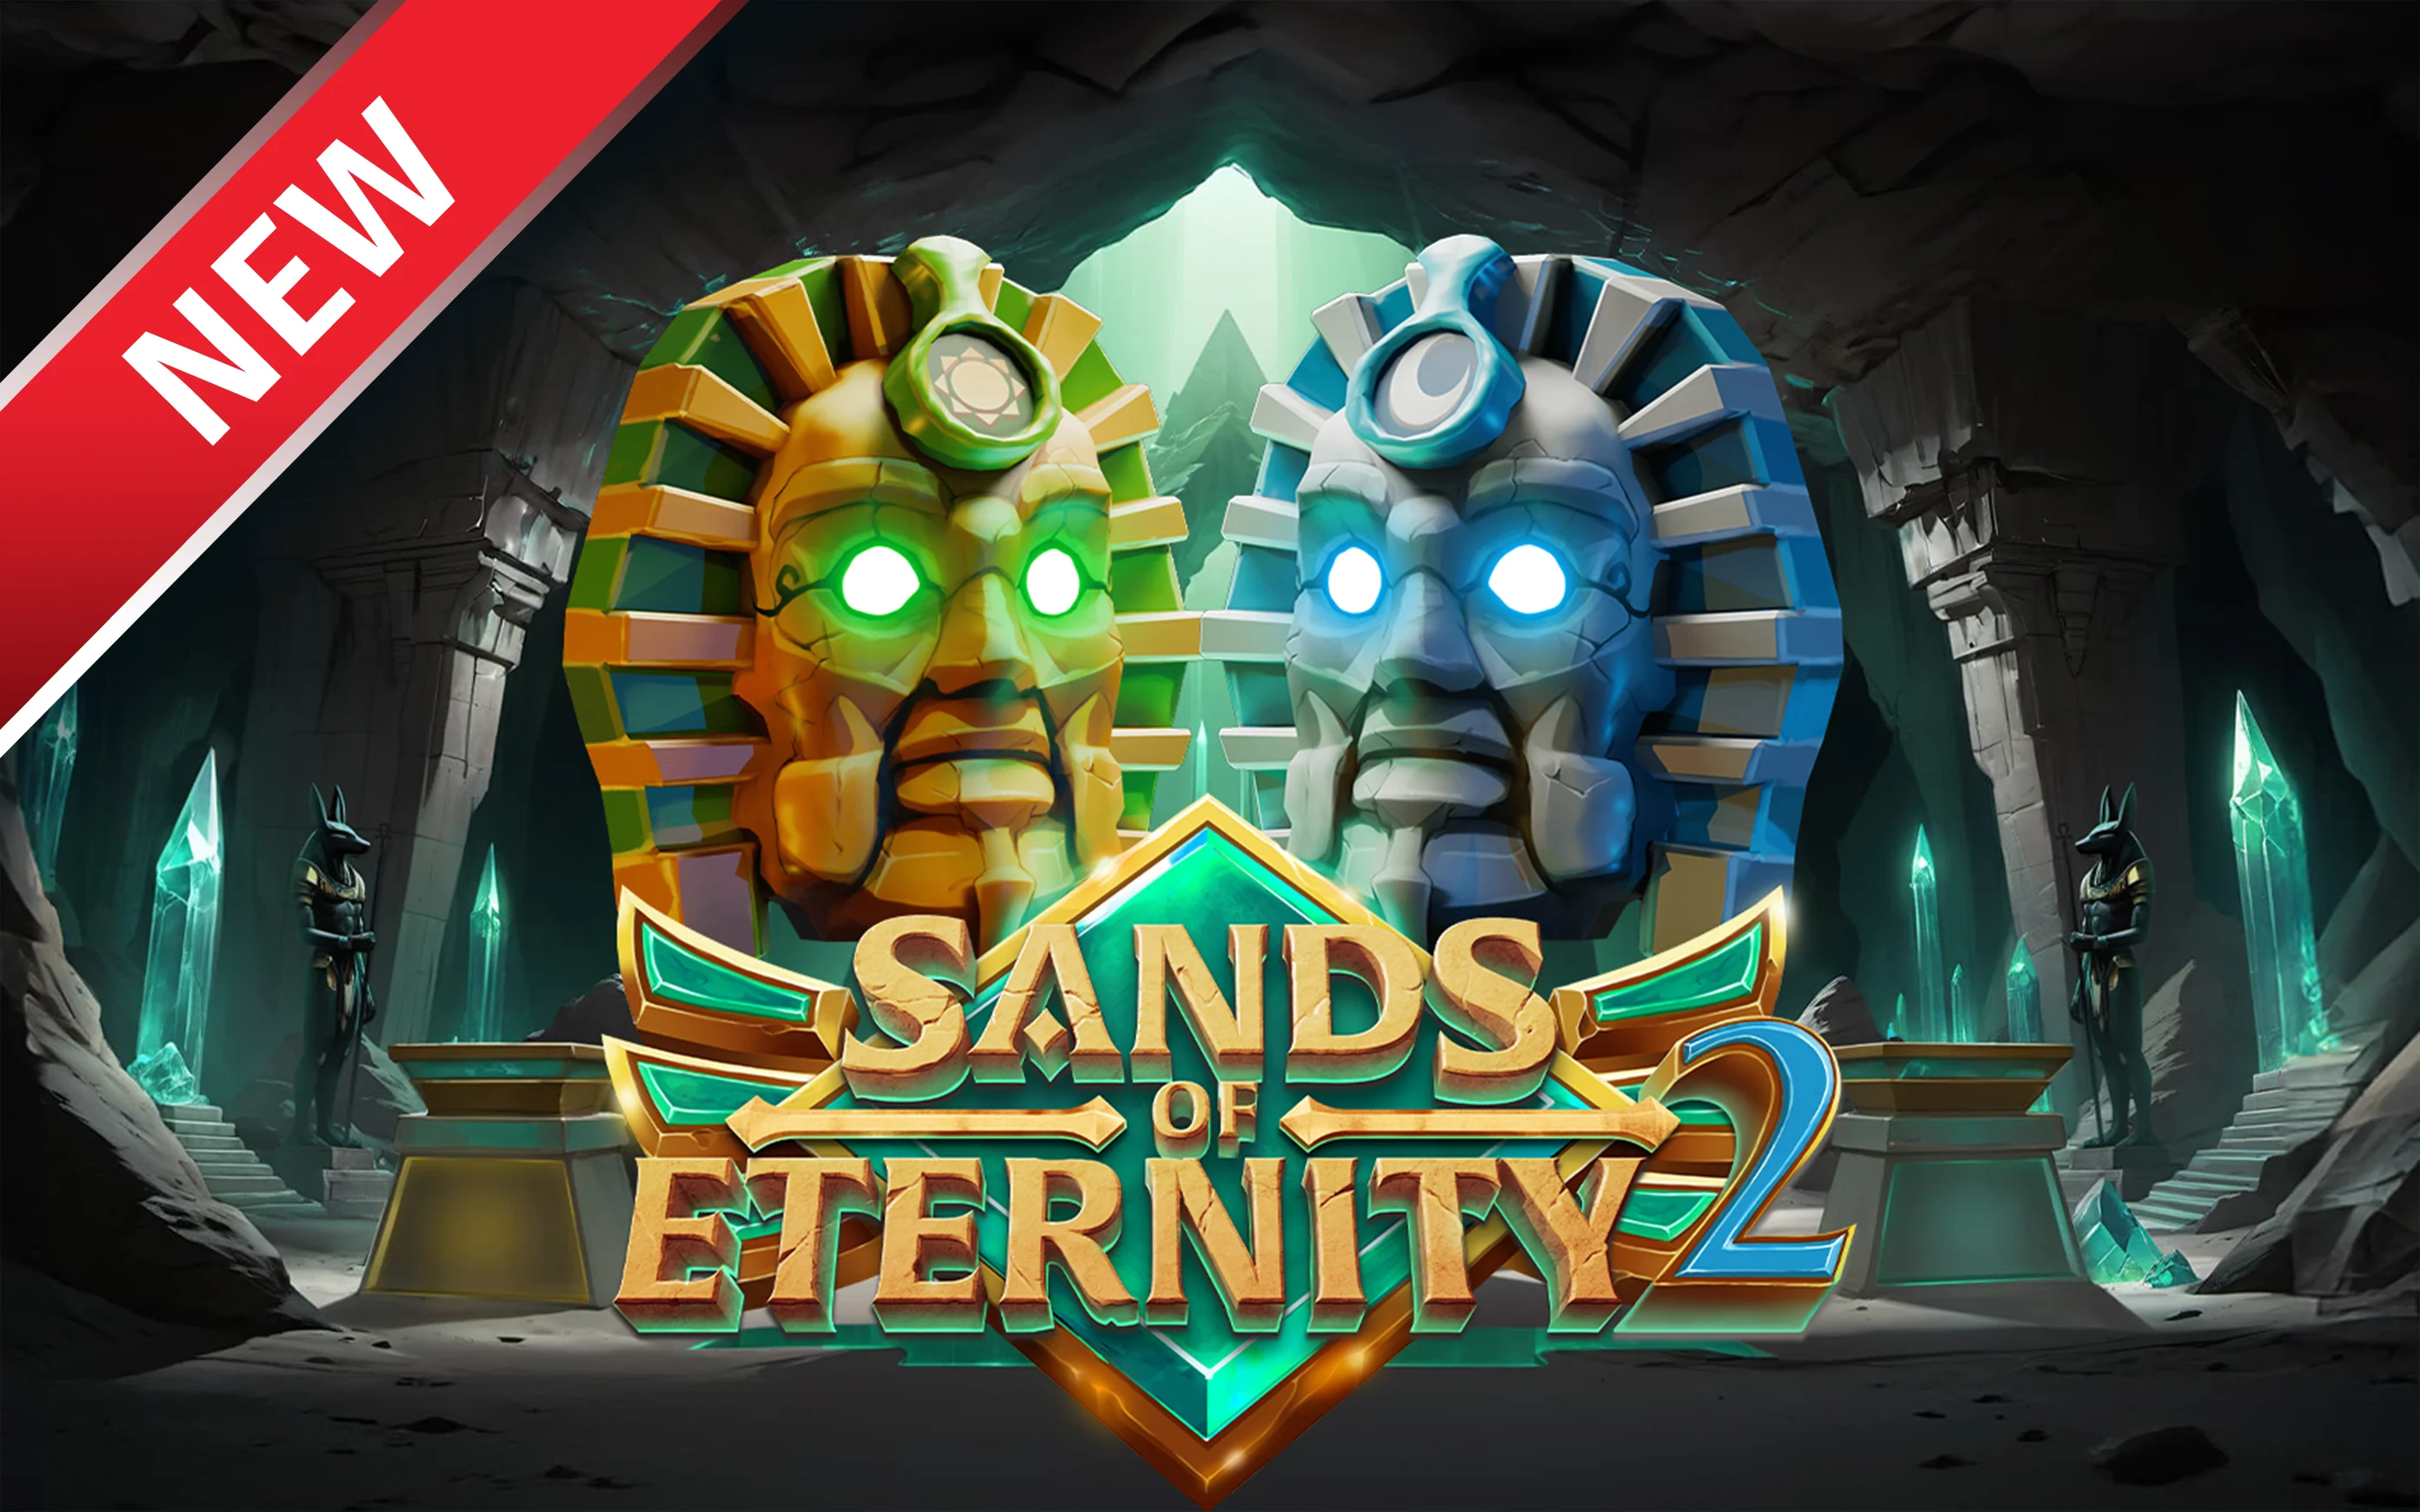 Gioca a Sands of Eternity 2 sul casino online Starcasino.be